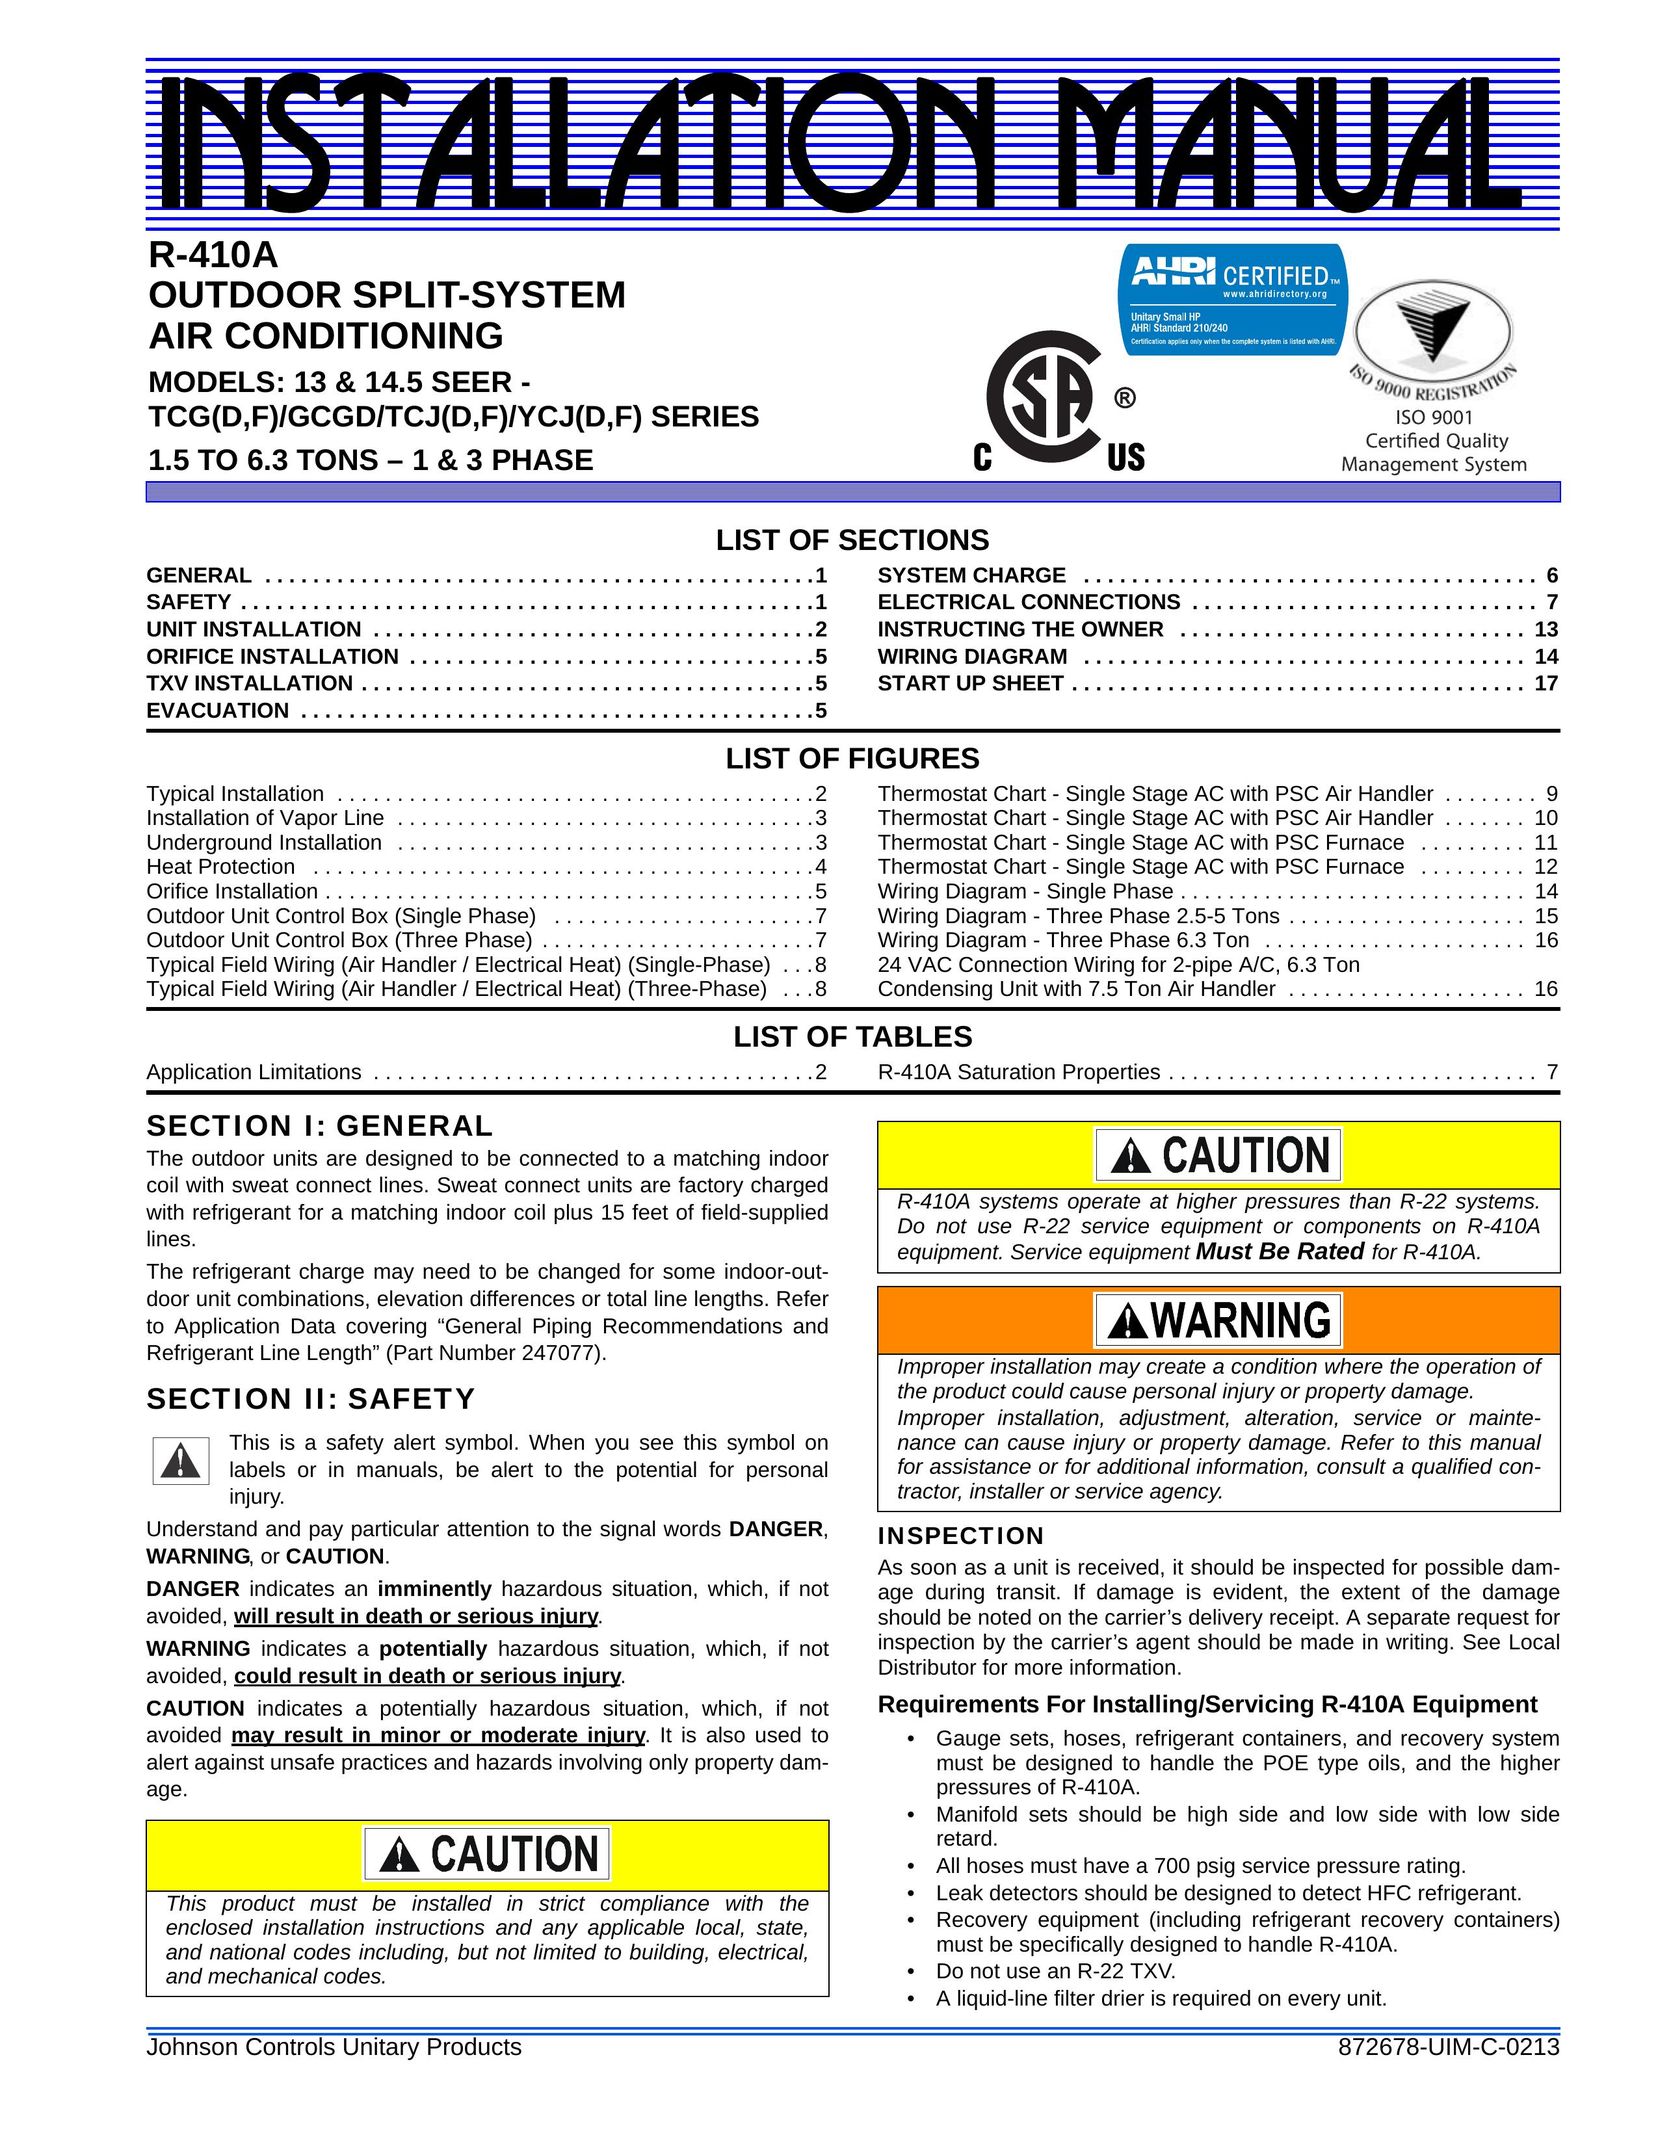 Johnson Controls 13 & 14.5 SEER - TCG(D Air Conditioner User Manual